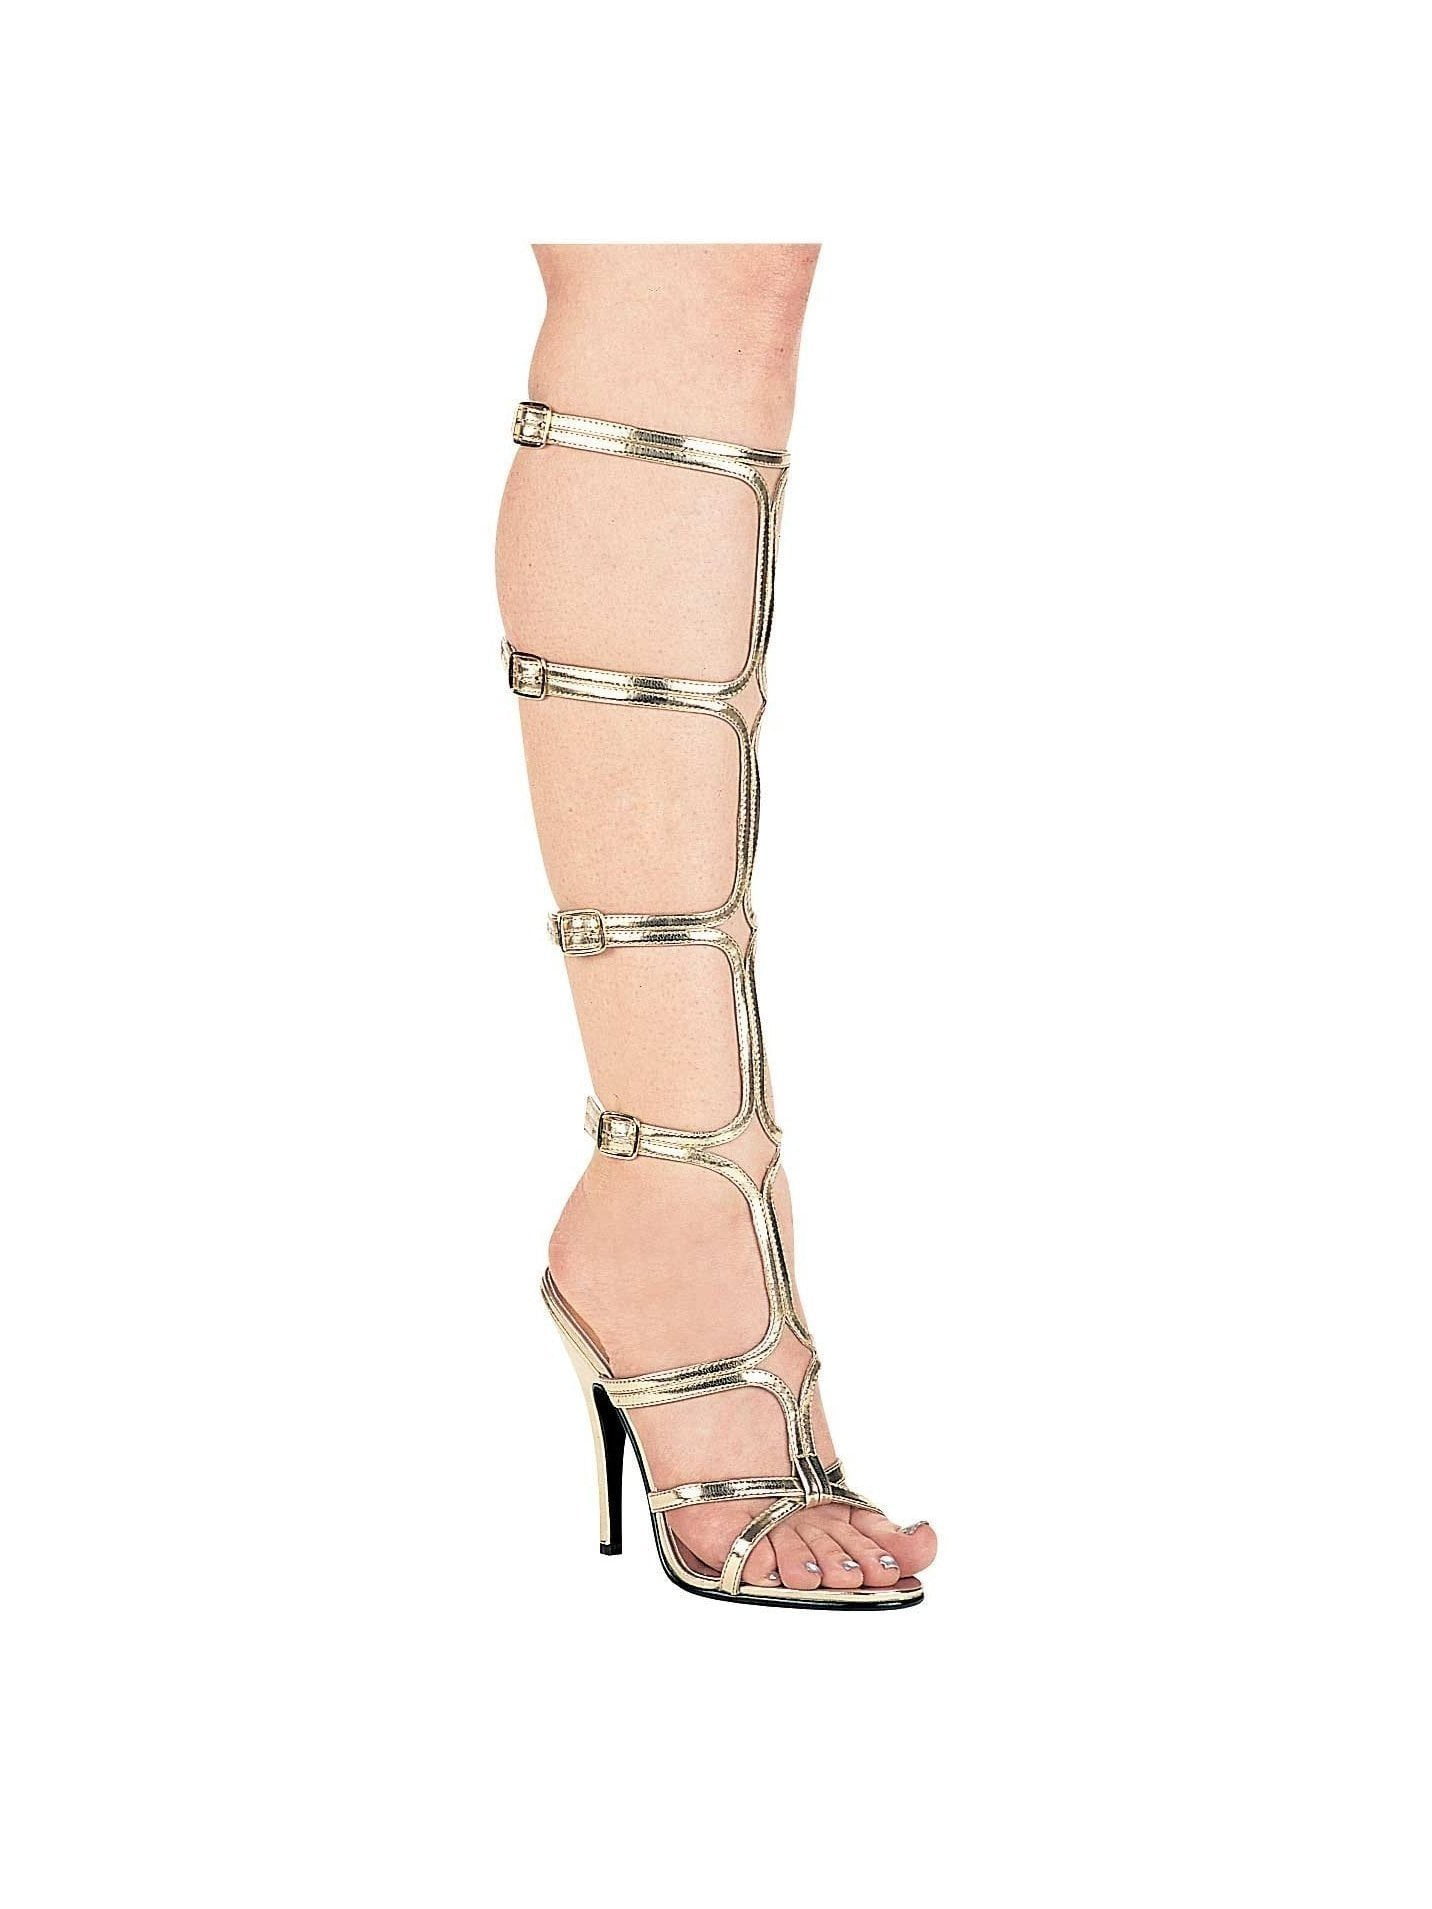 tall gladiator heels